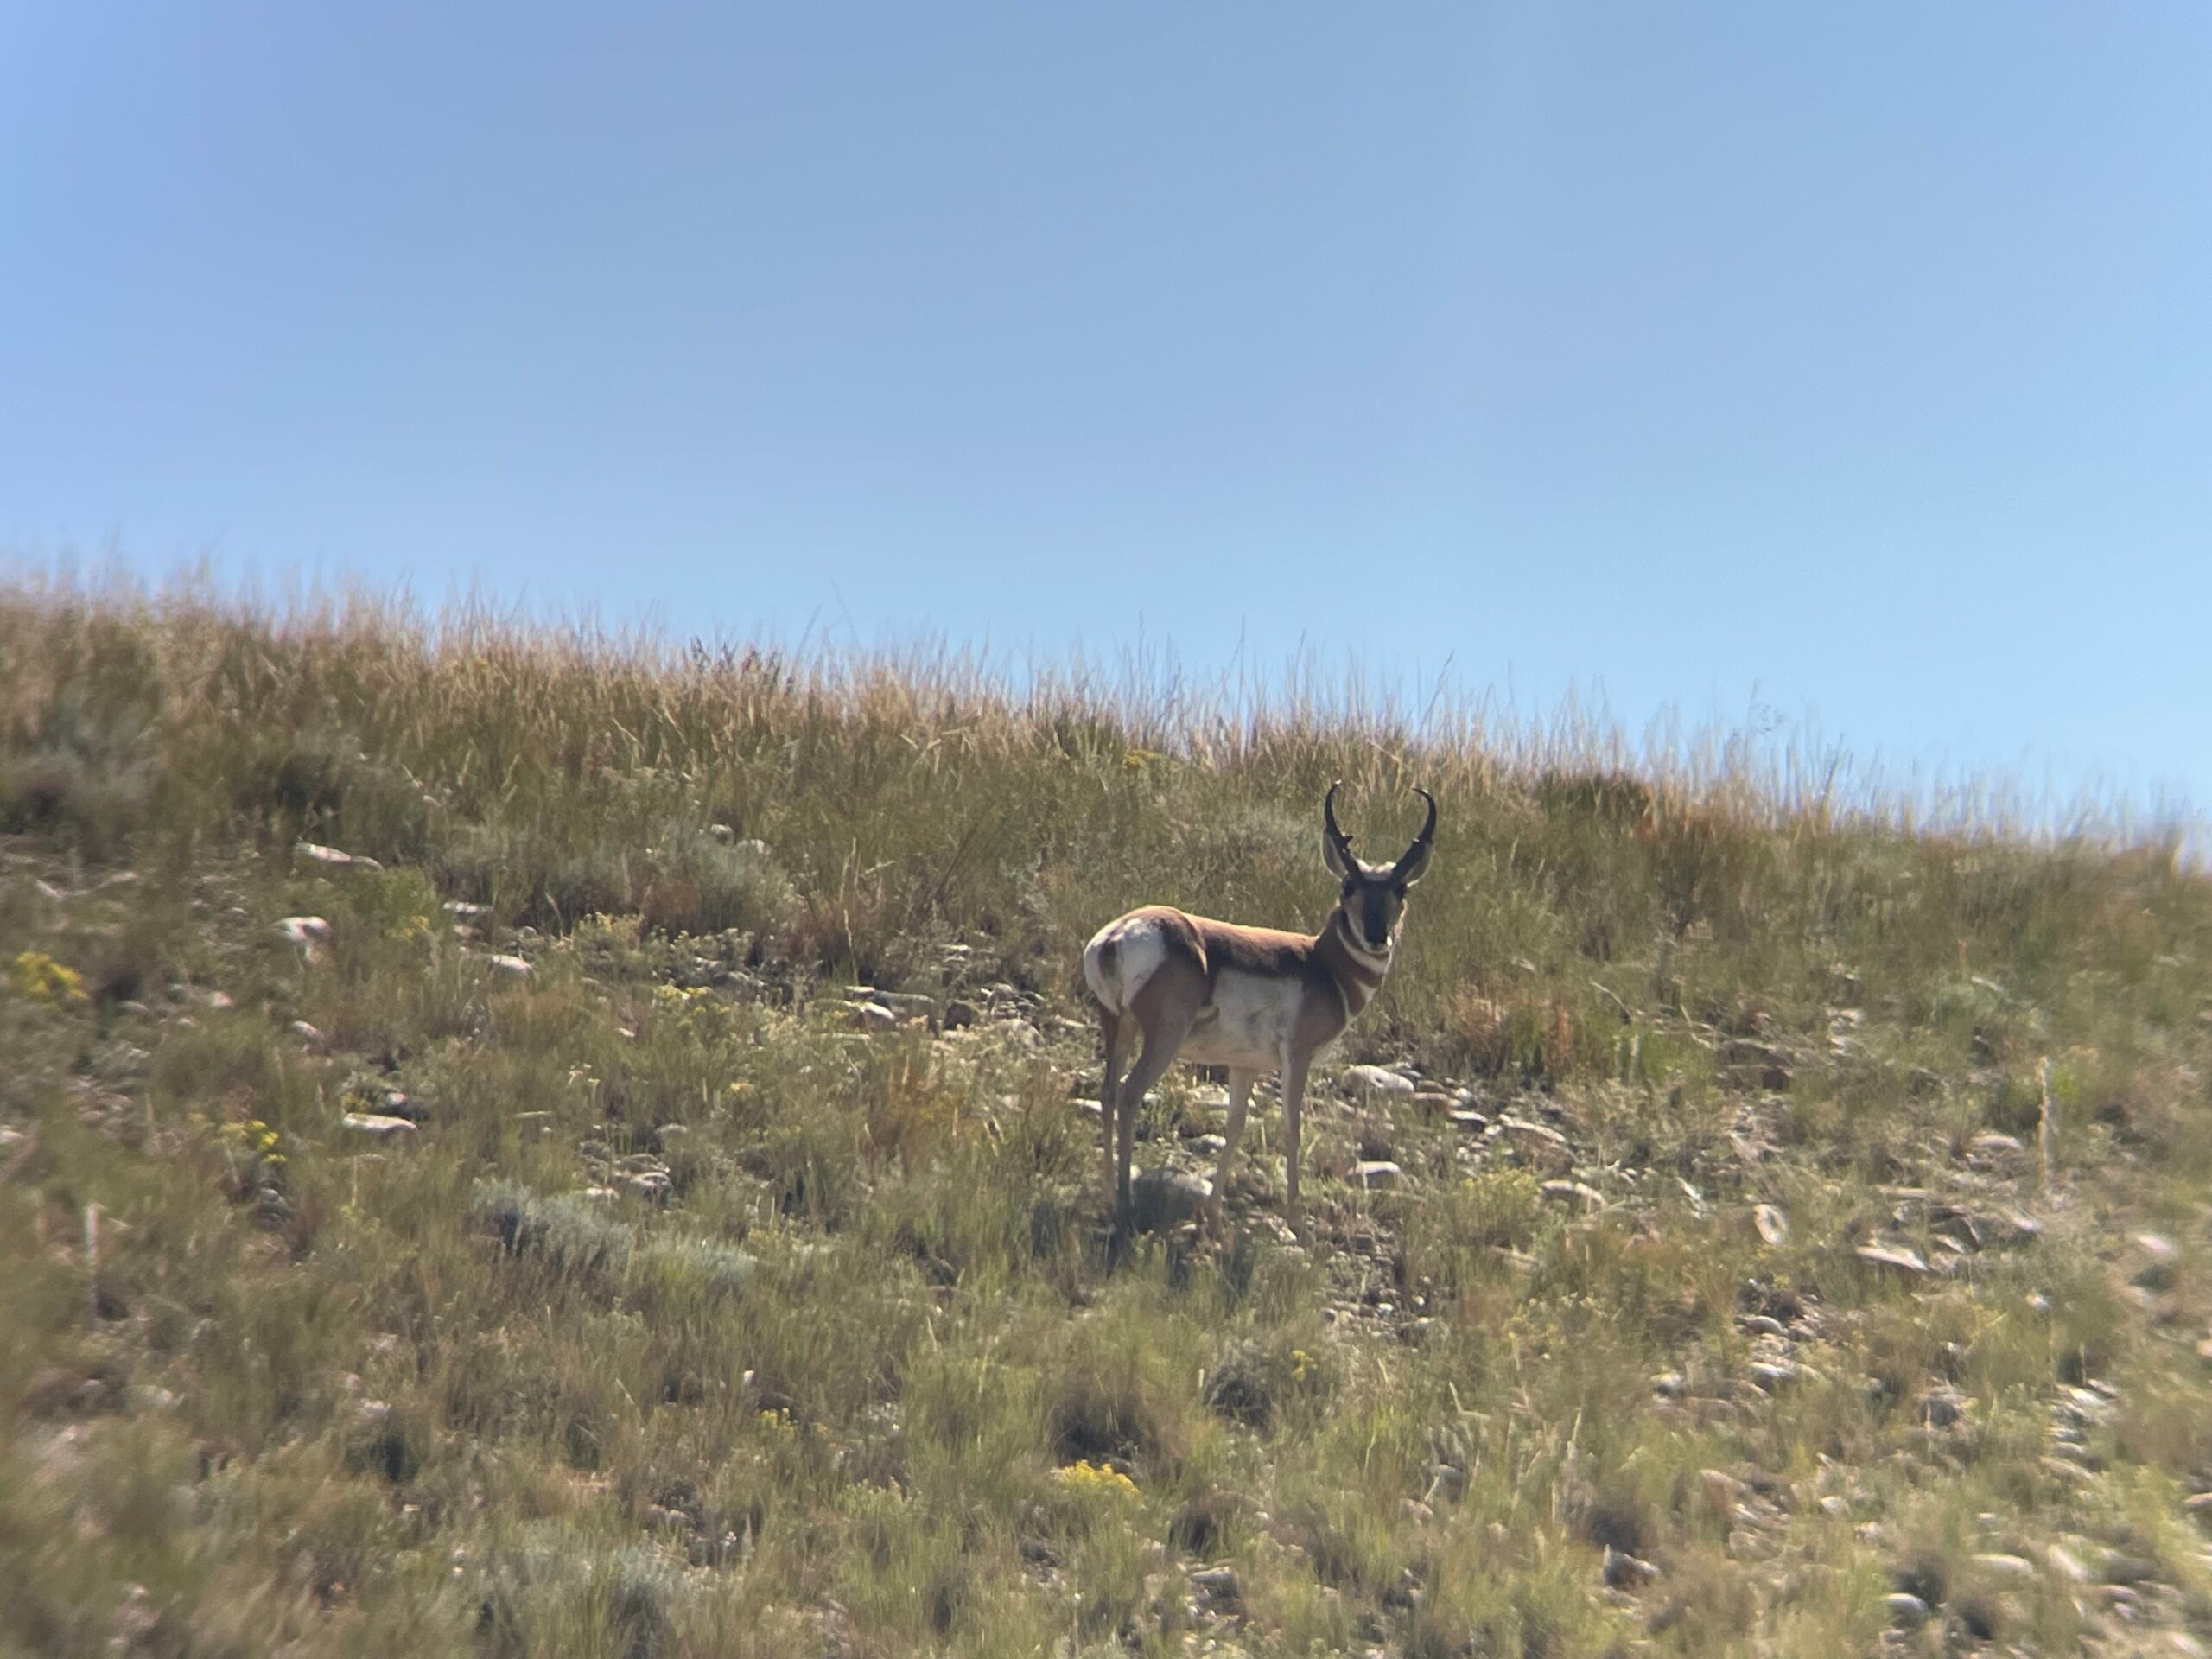 Pronghorn antelope in field